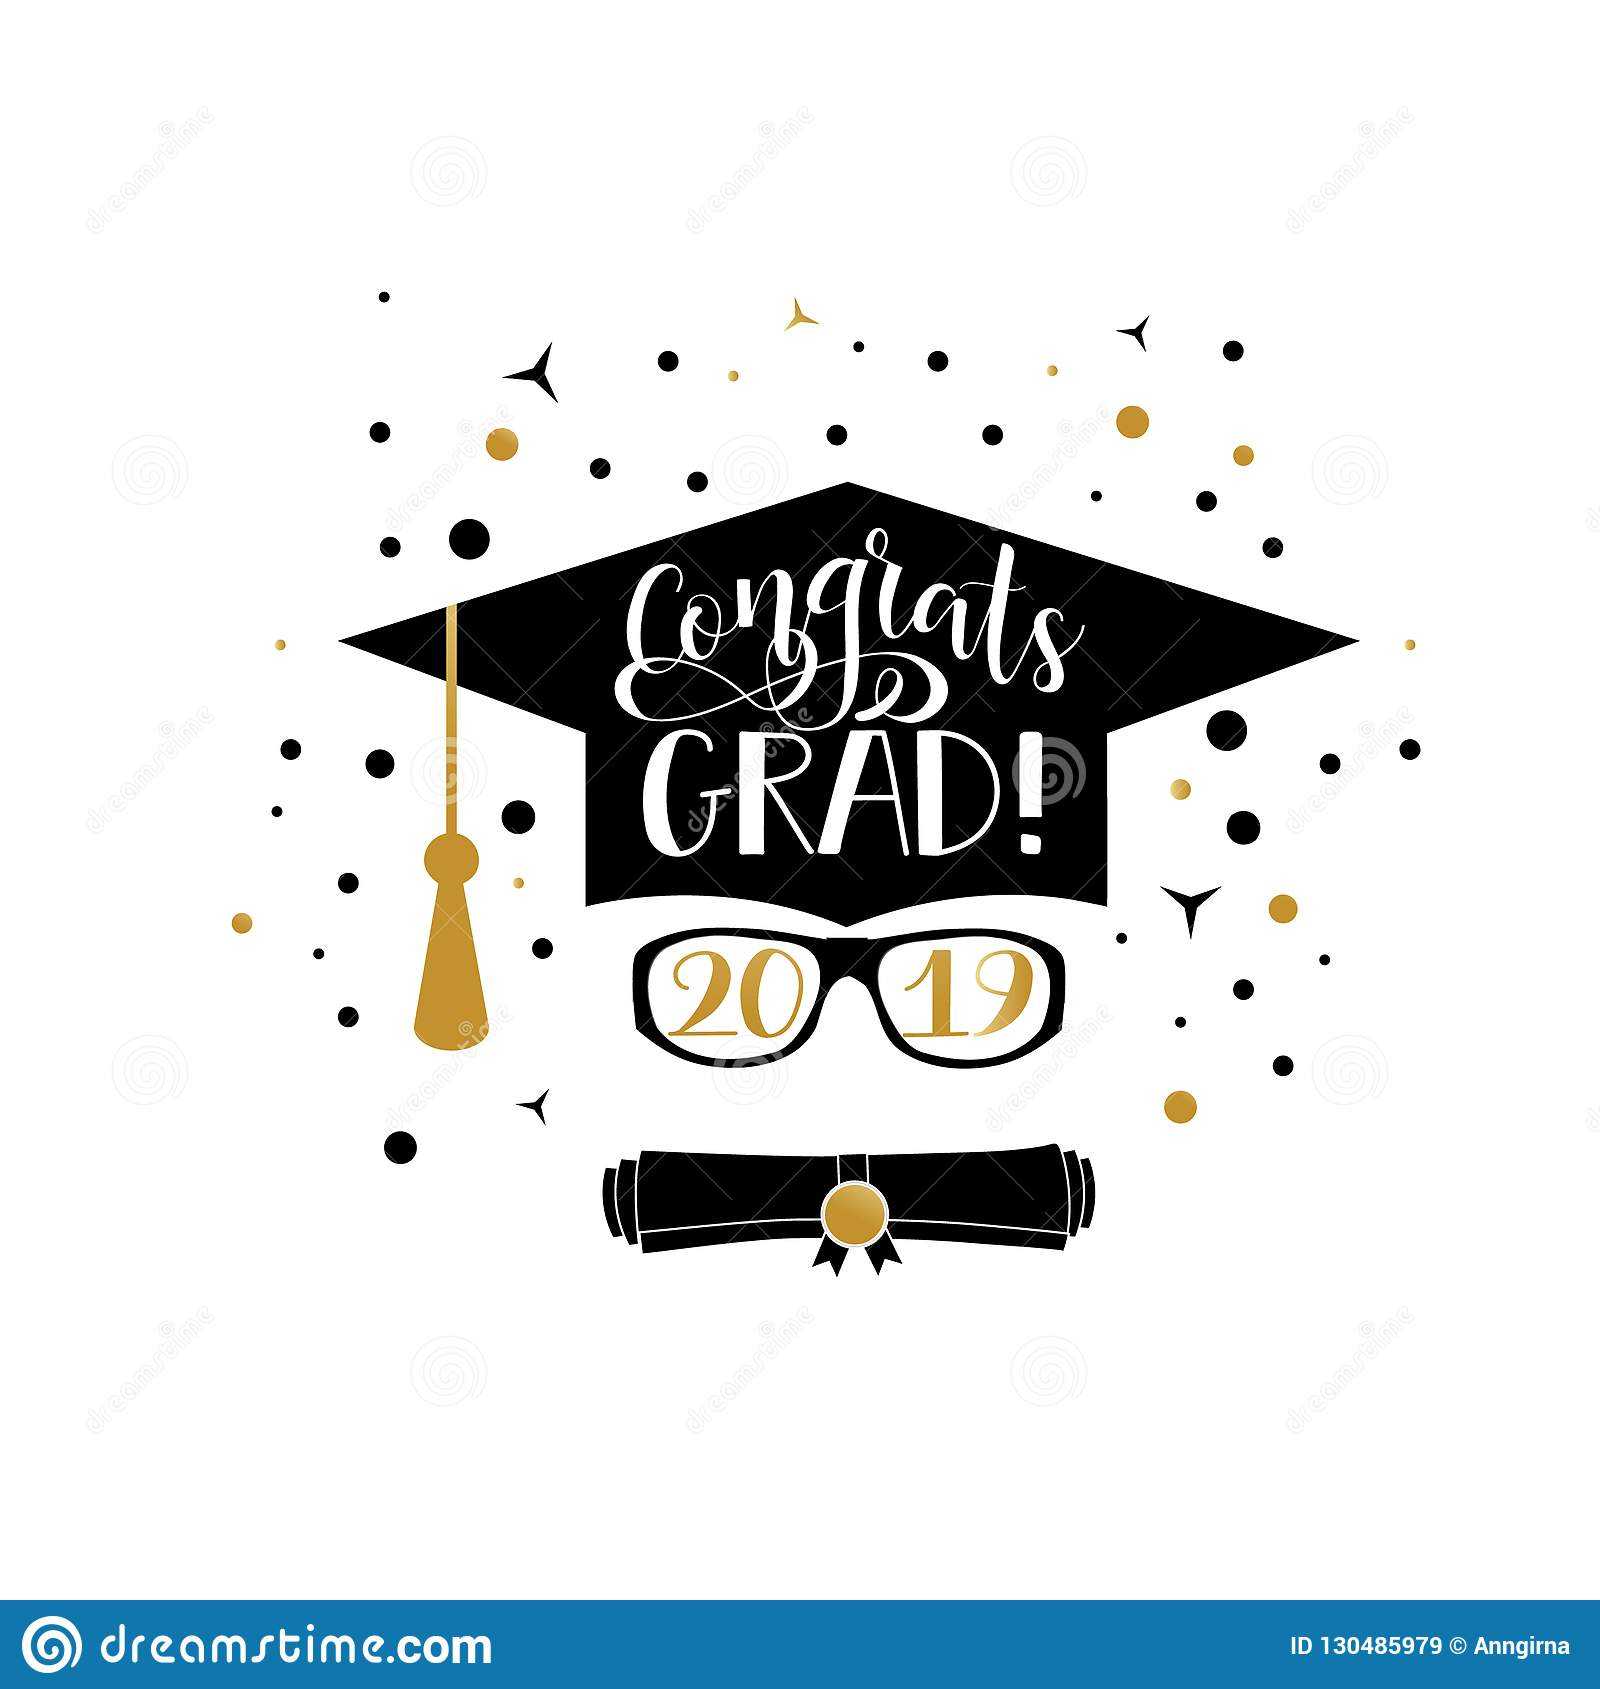 Congrats Grad 2019 Lettering. Congratulations Graduate Throughout Graduation Banner Template